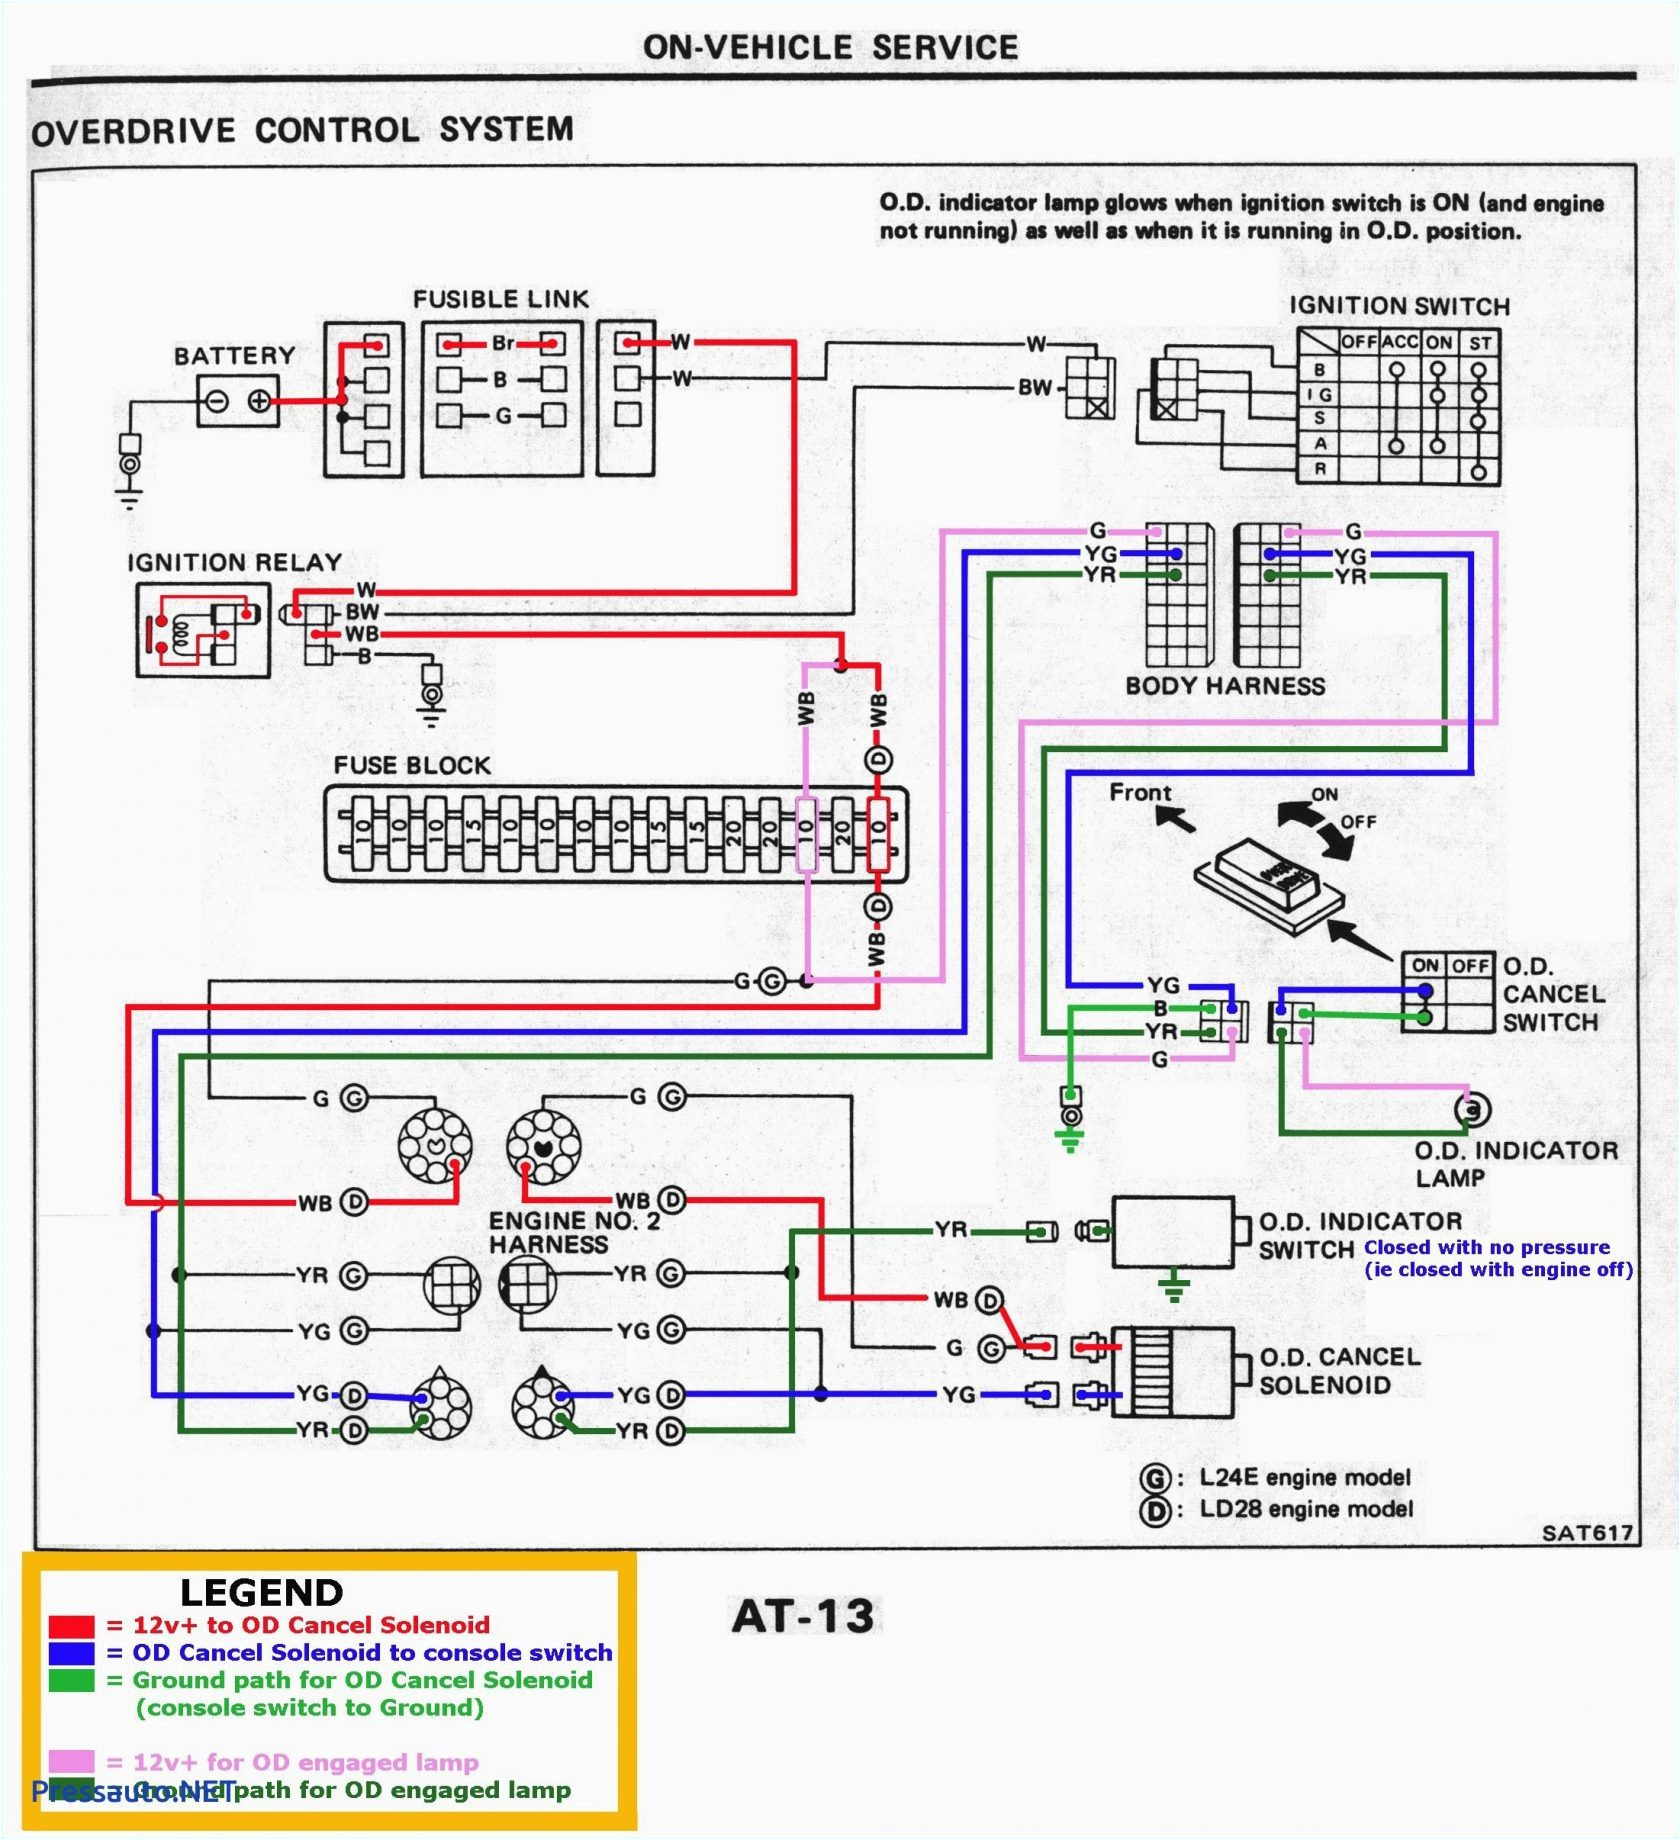 autoshop101 wiring diagrams wiring diagrams konsult autoshop101 wiring diagrams